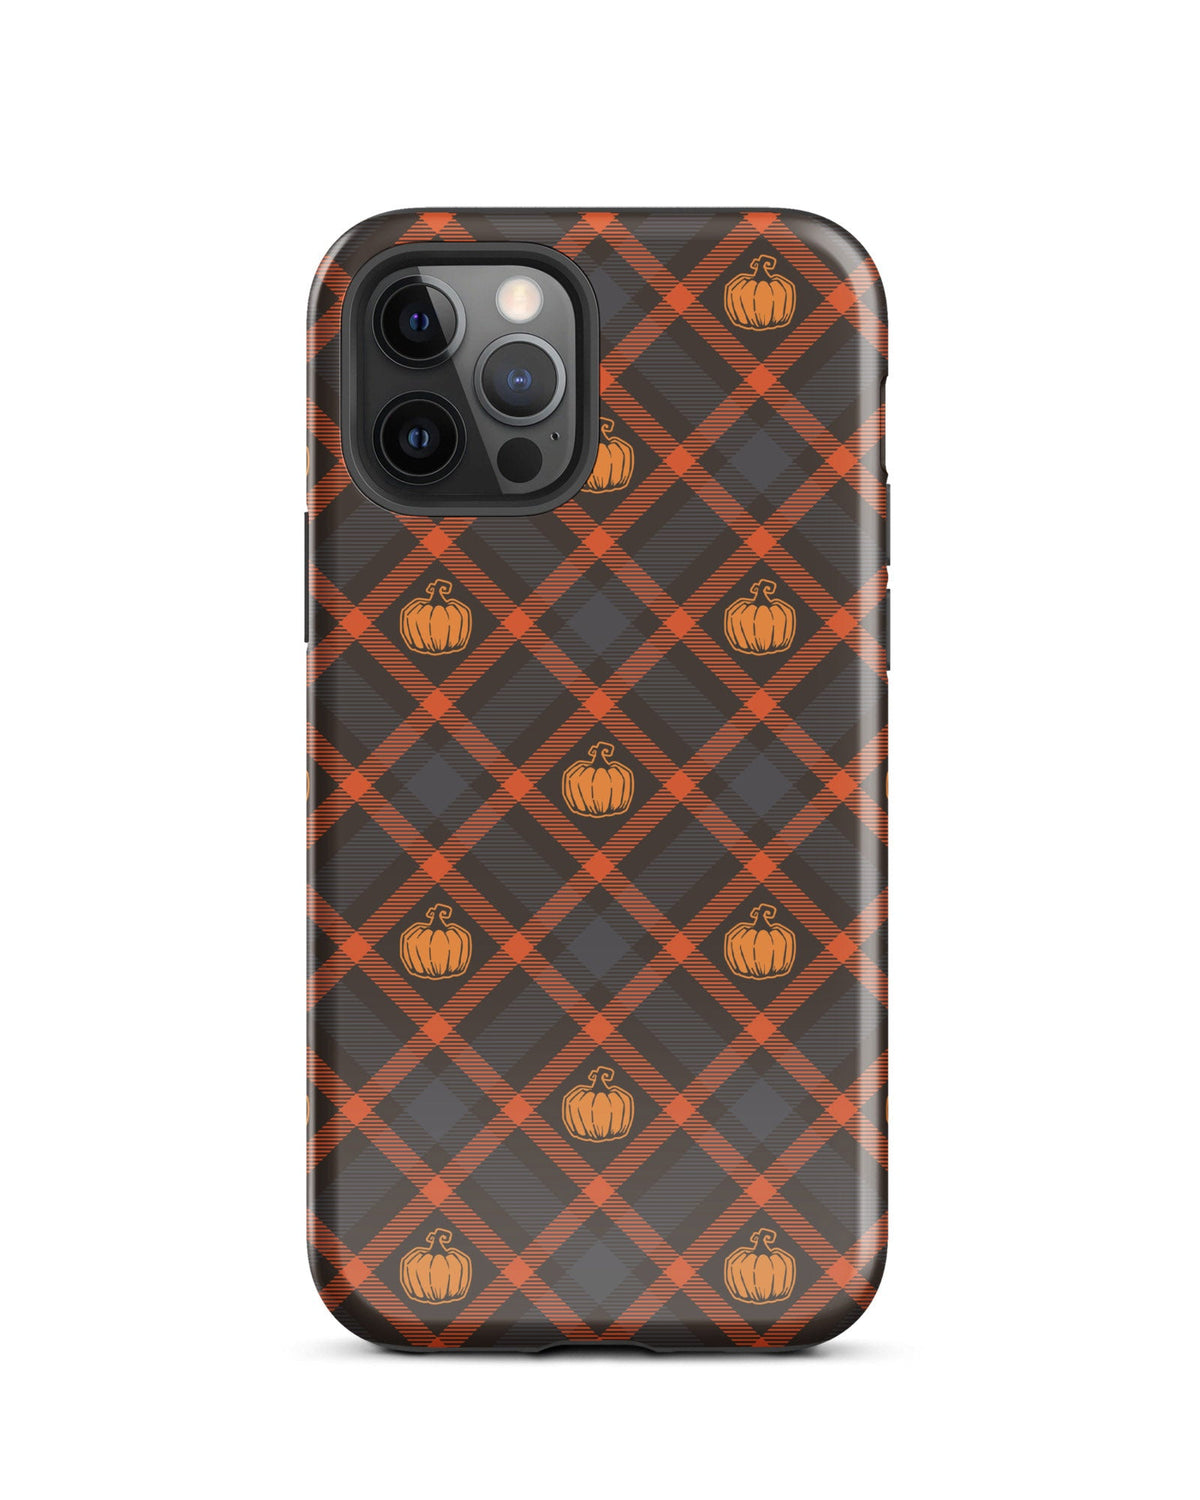 Pumpkin Plaid Cabin Case for iPhone®